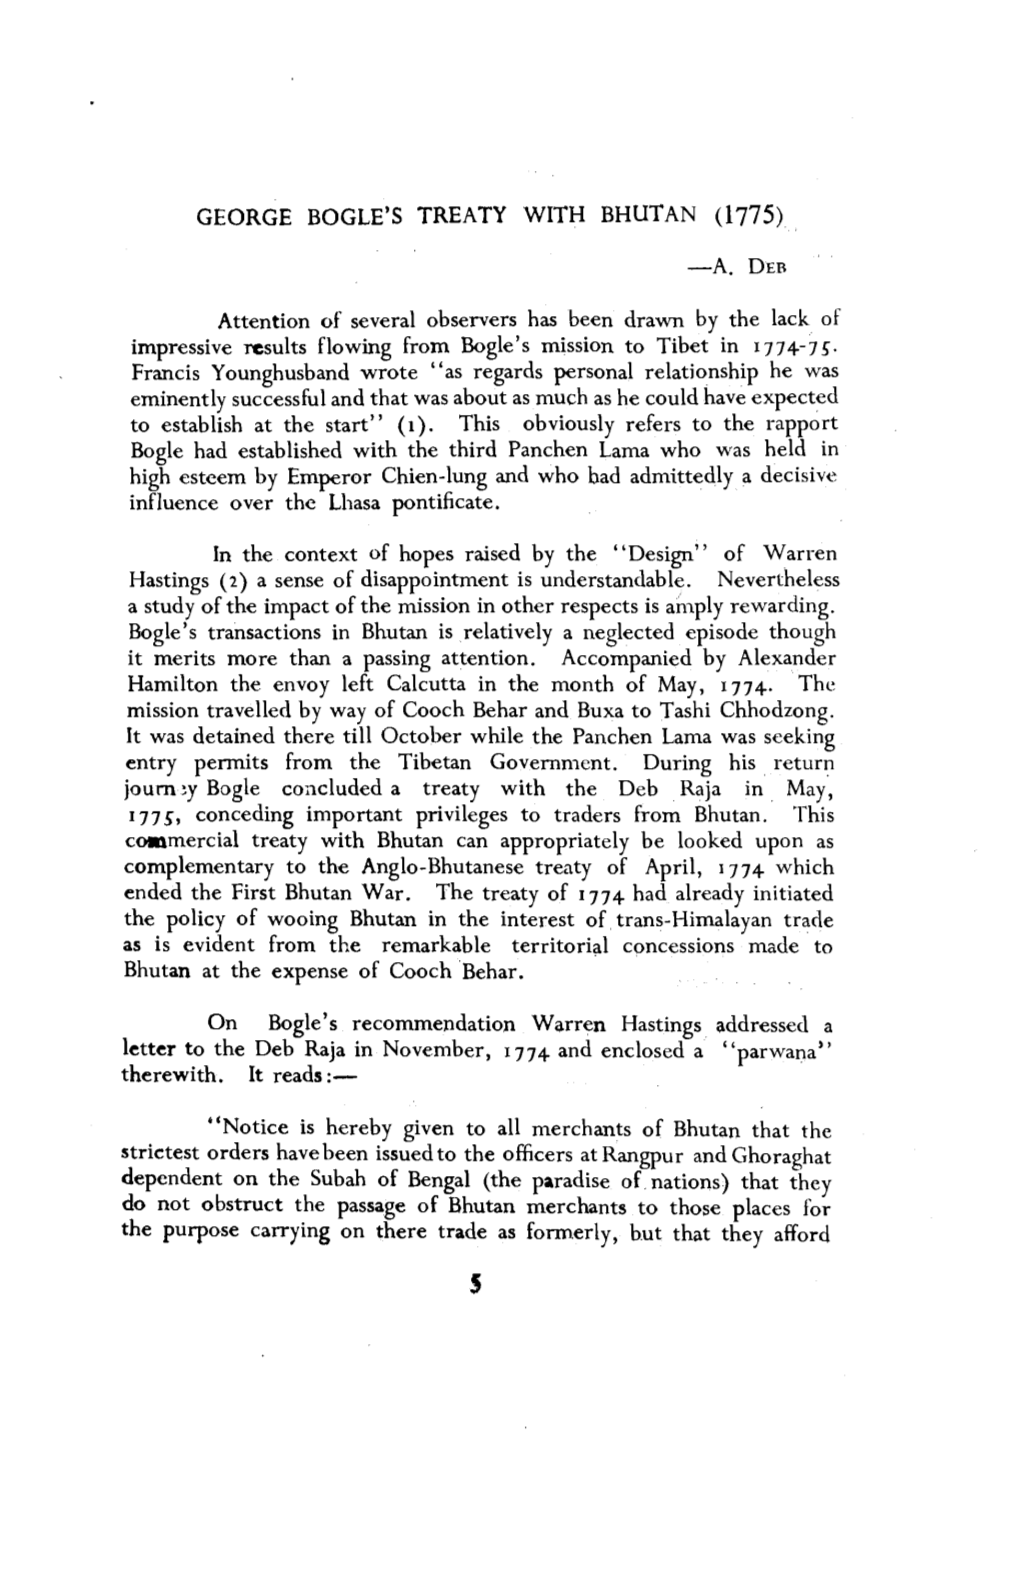 George Bogle's Treaty with Bhutan (1775)